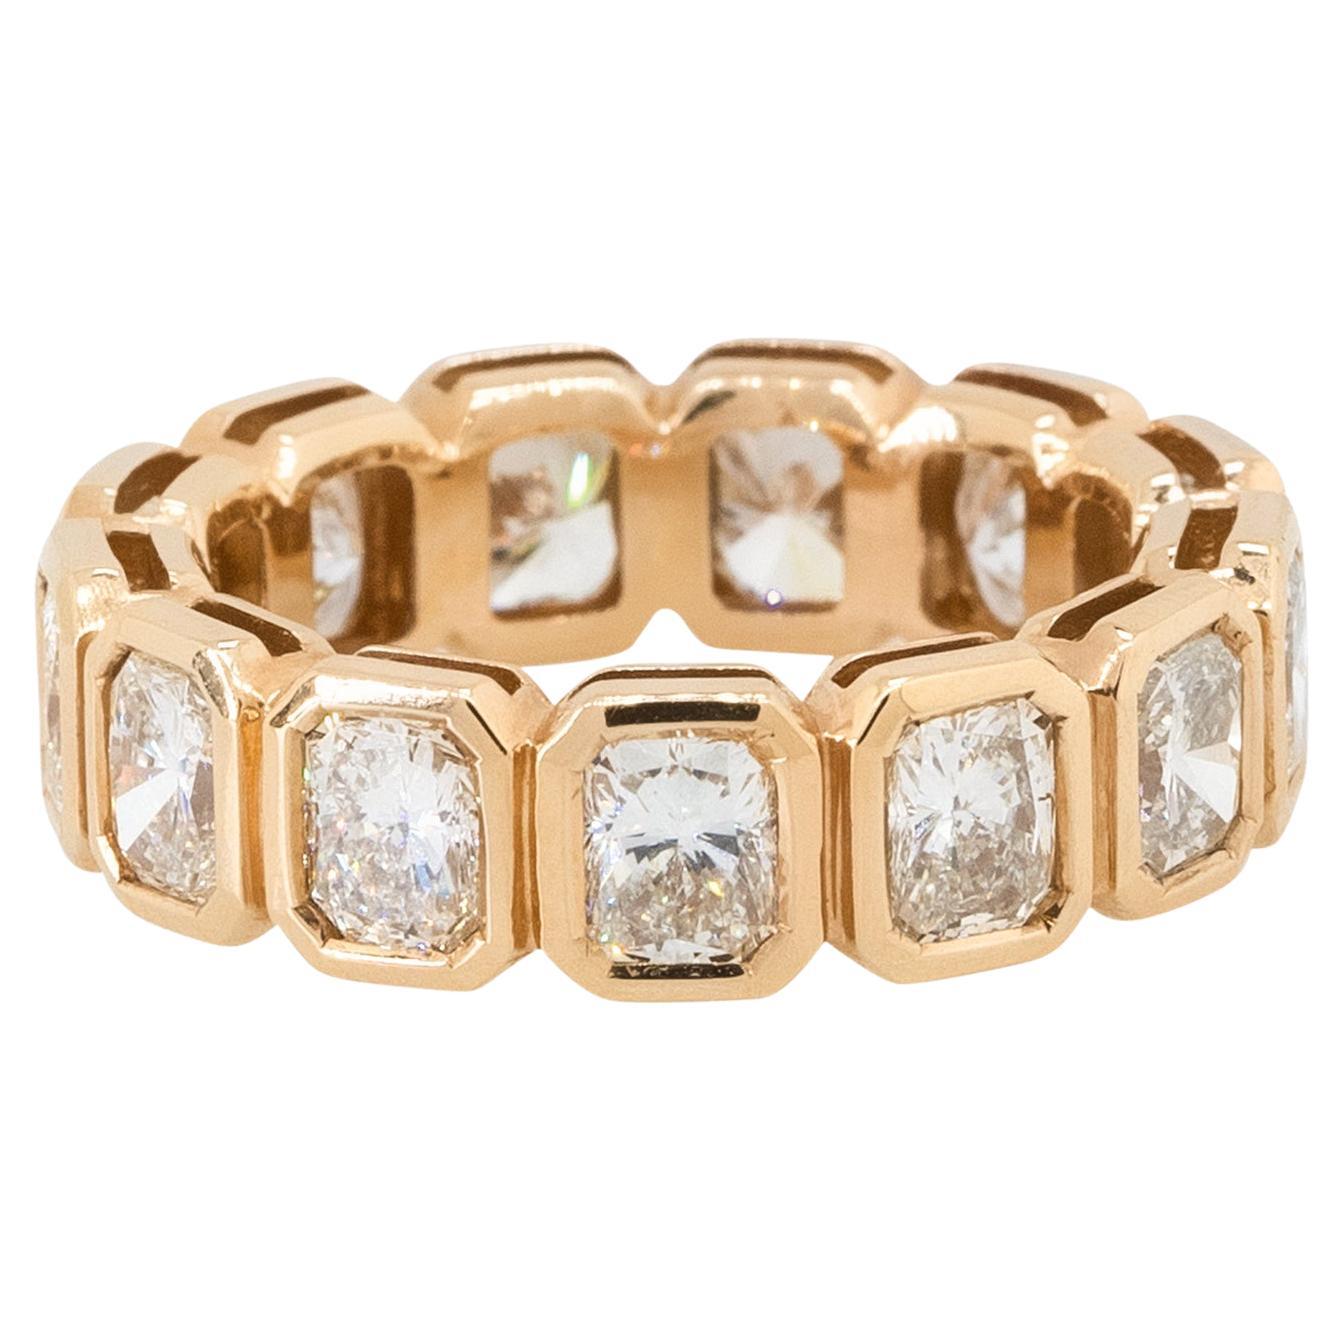 5.12 Carat Radiant Cut Diamond Eternity Ring 18 Karat In Stock For Sale